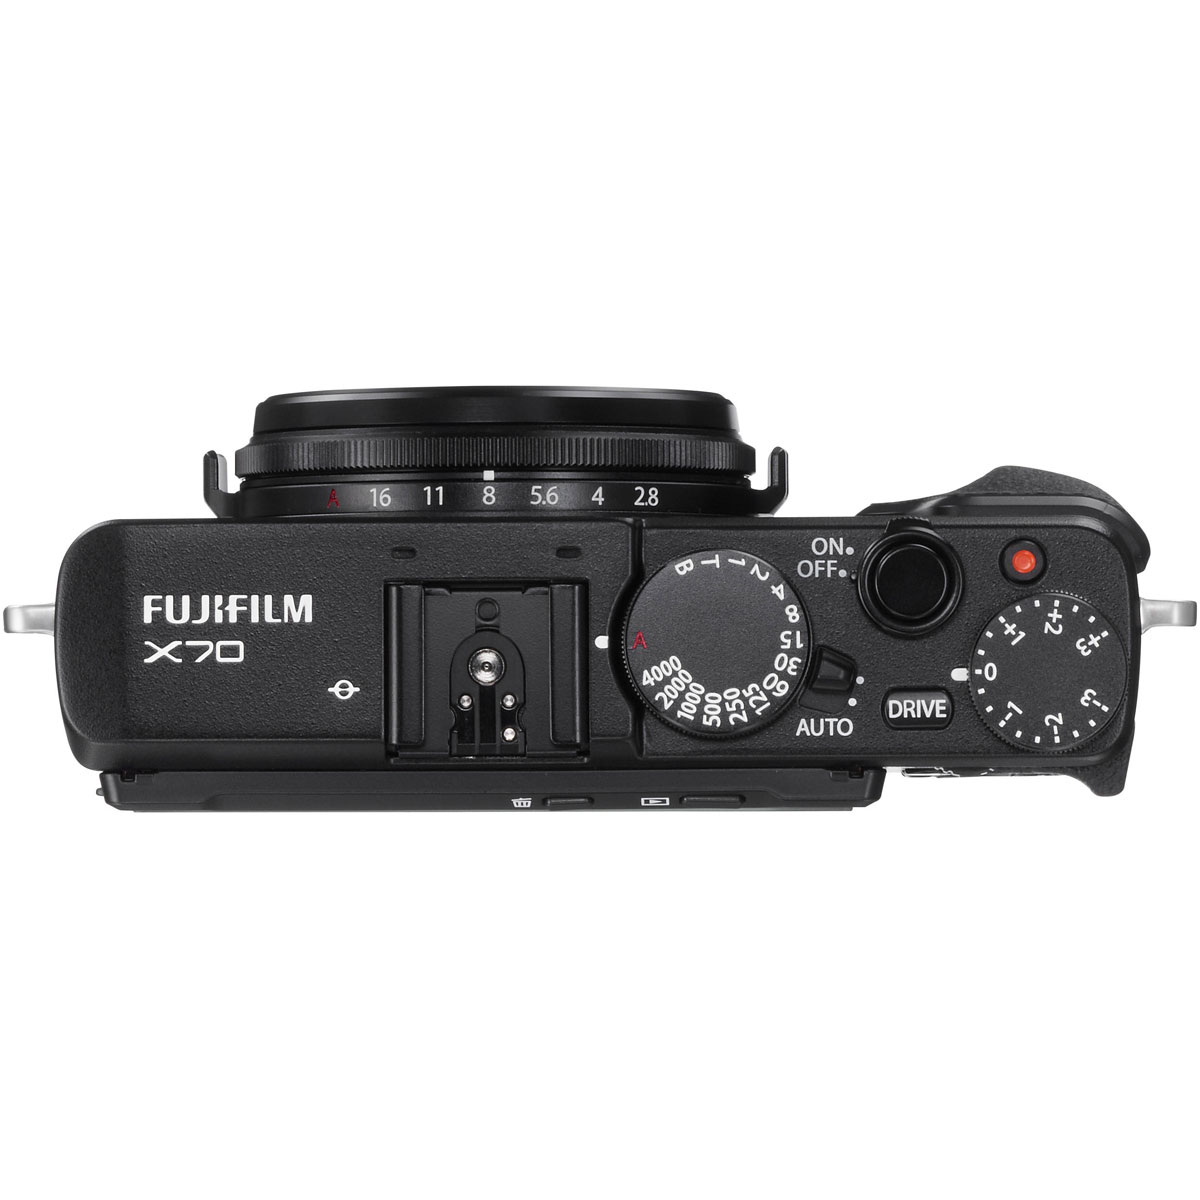 Fujifilm X70 Digital Camera